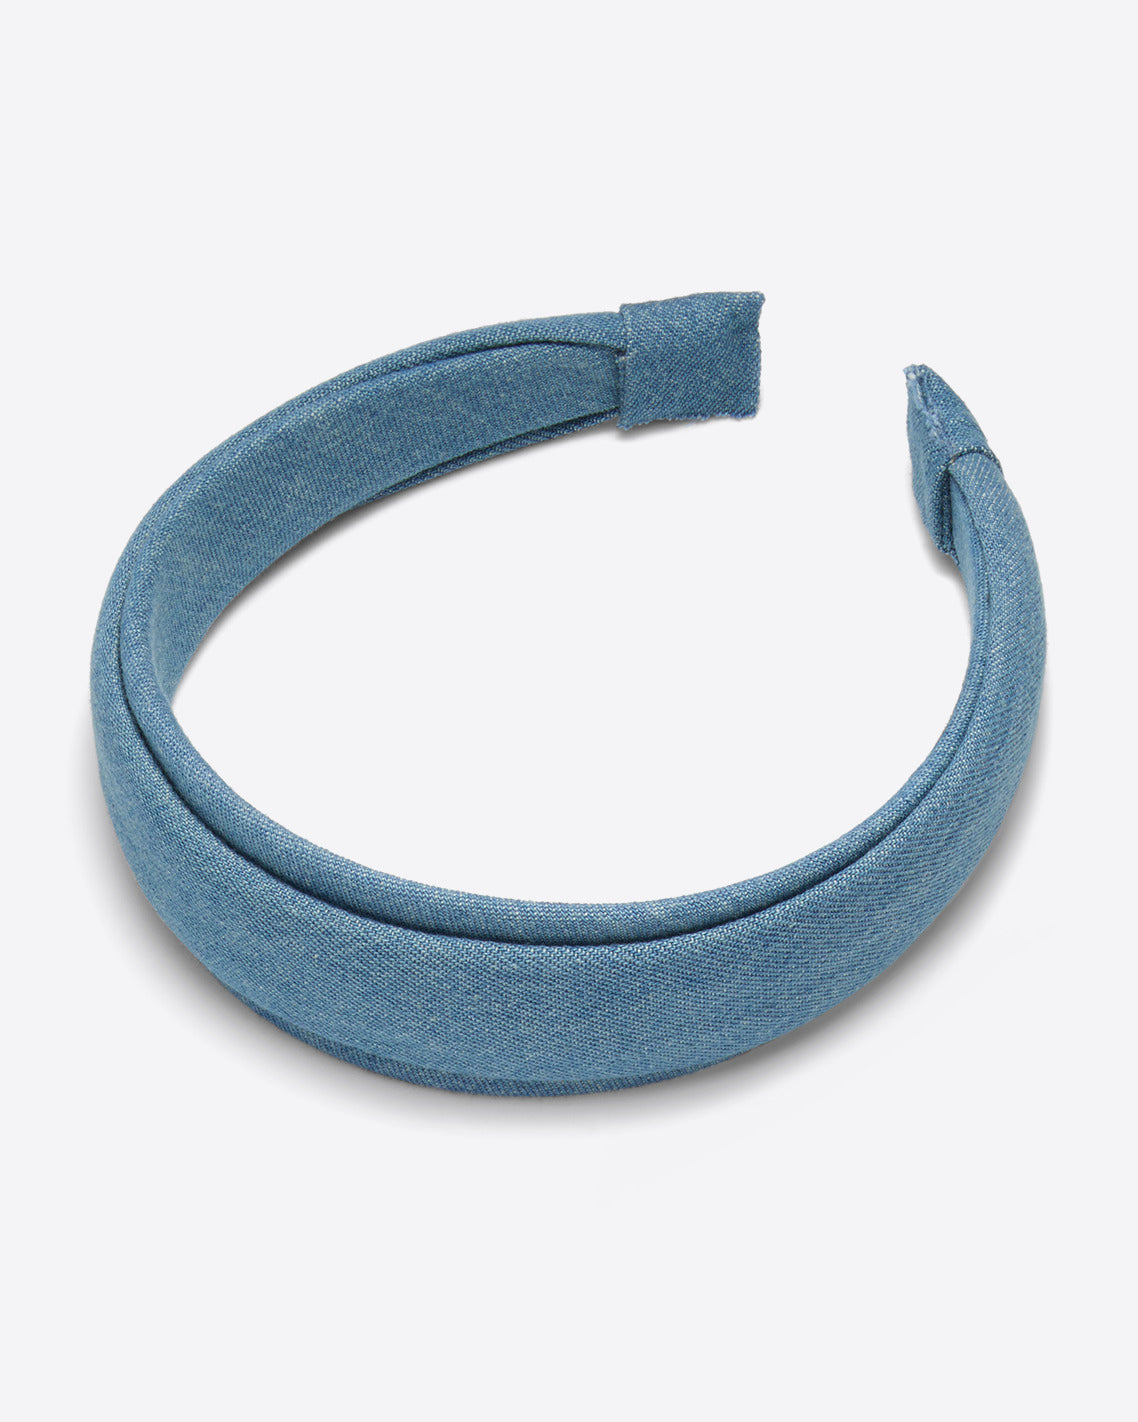 Pleated Headband in Denim